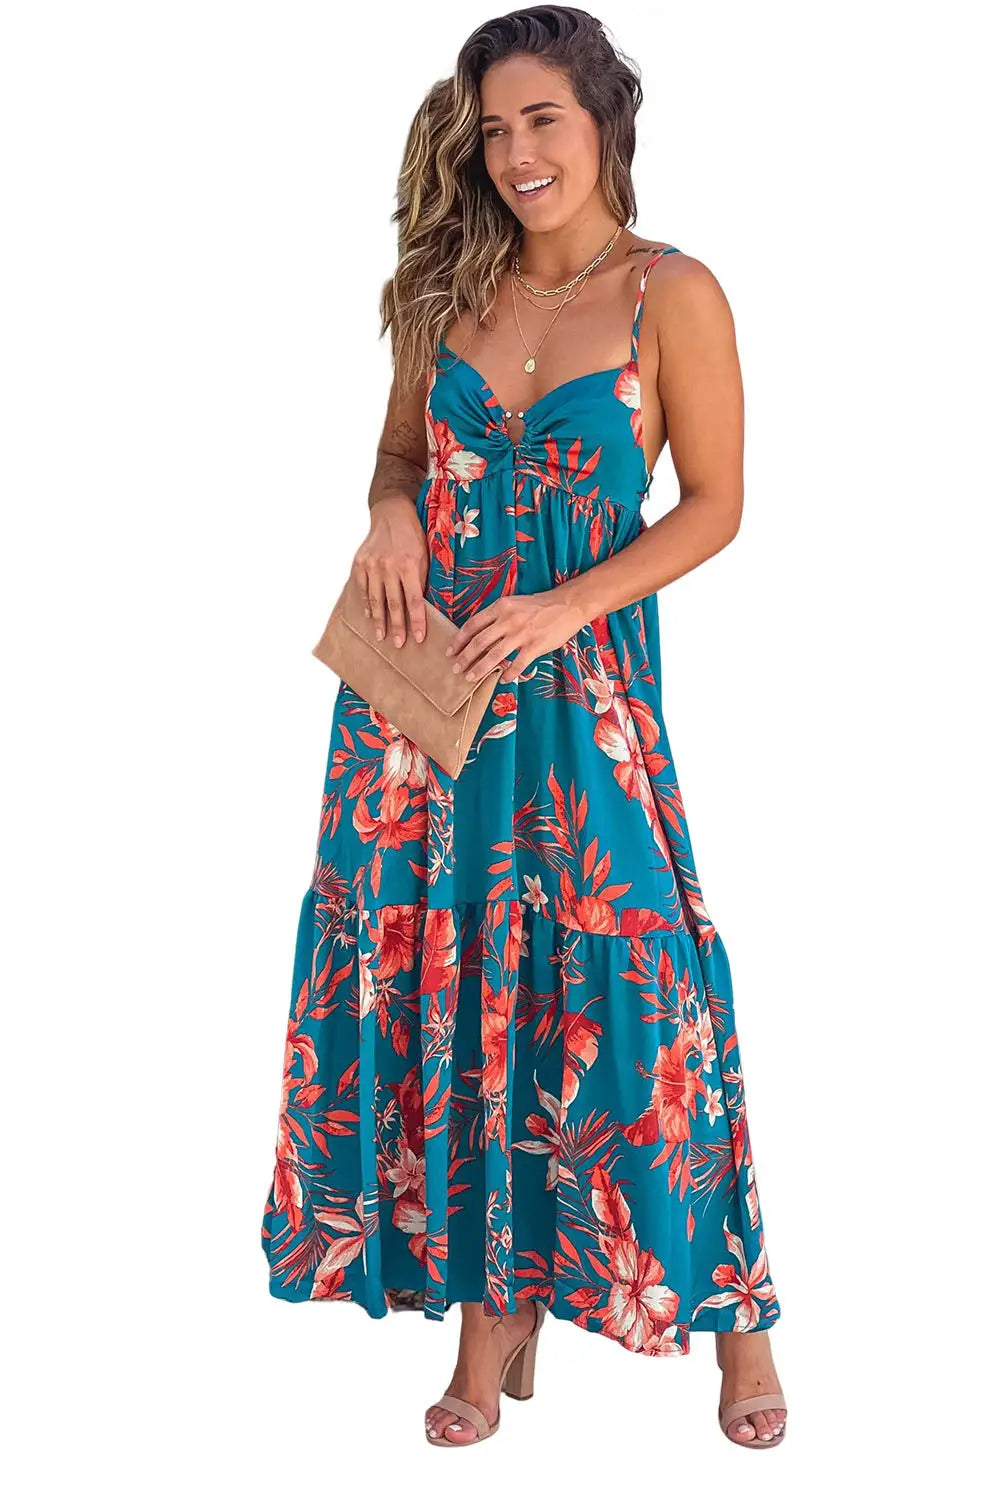 Sky blue strappy open back floral maxi dress - dresses